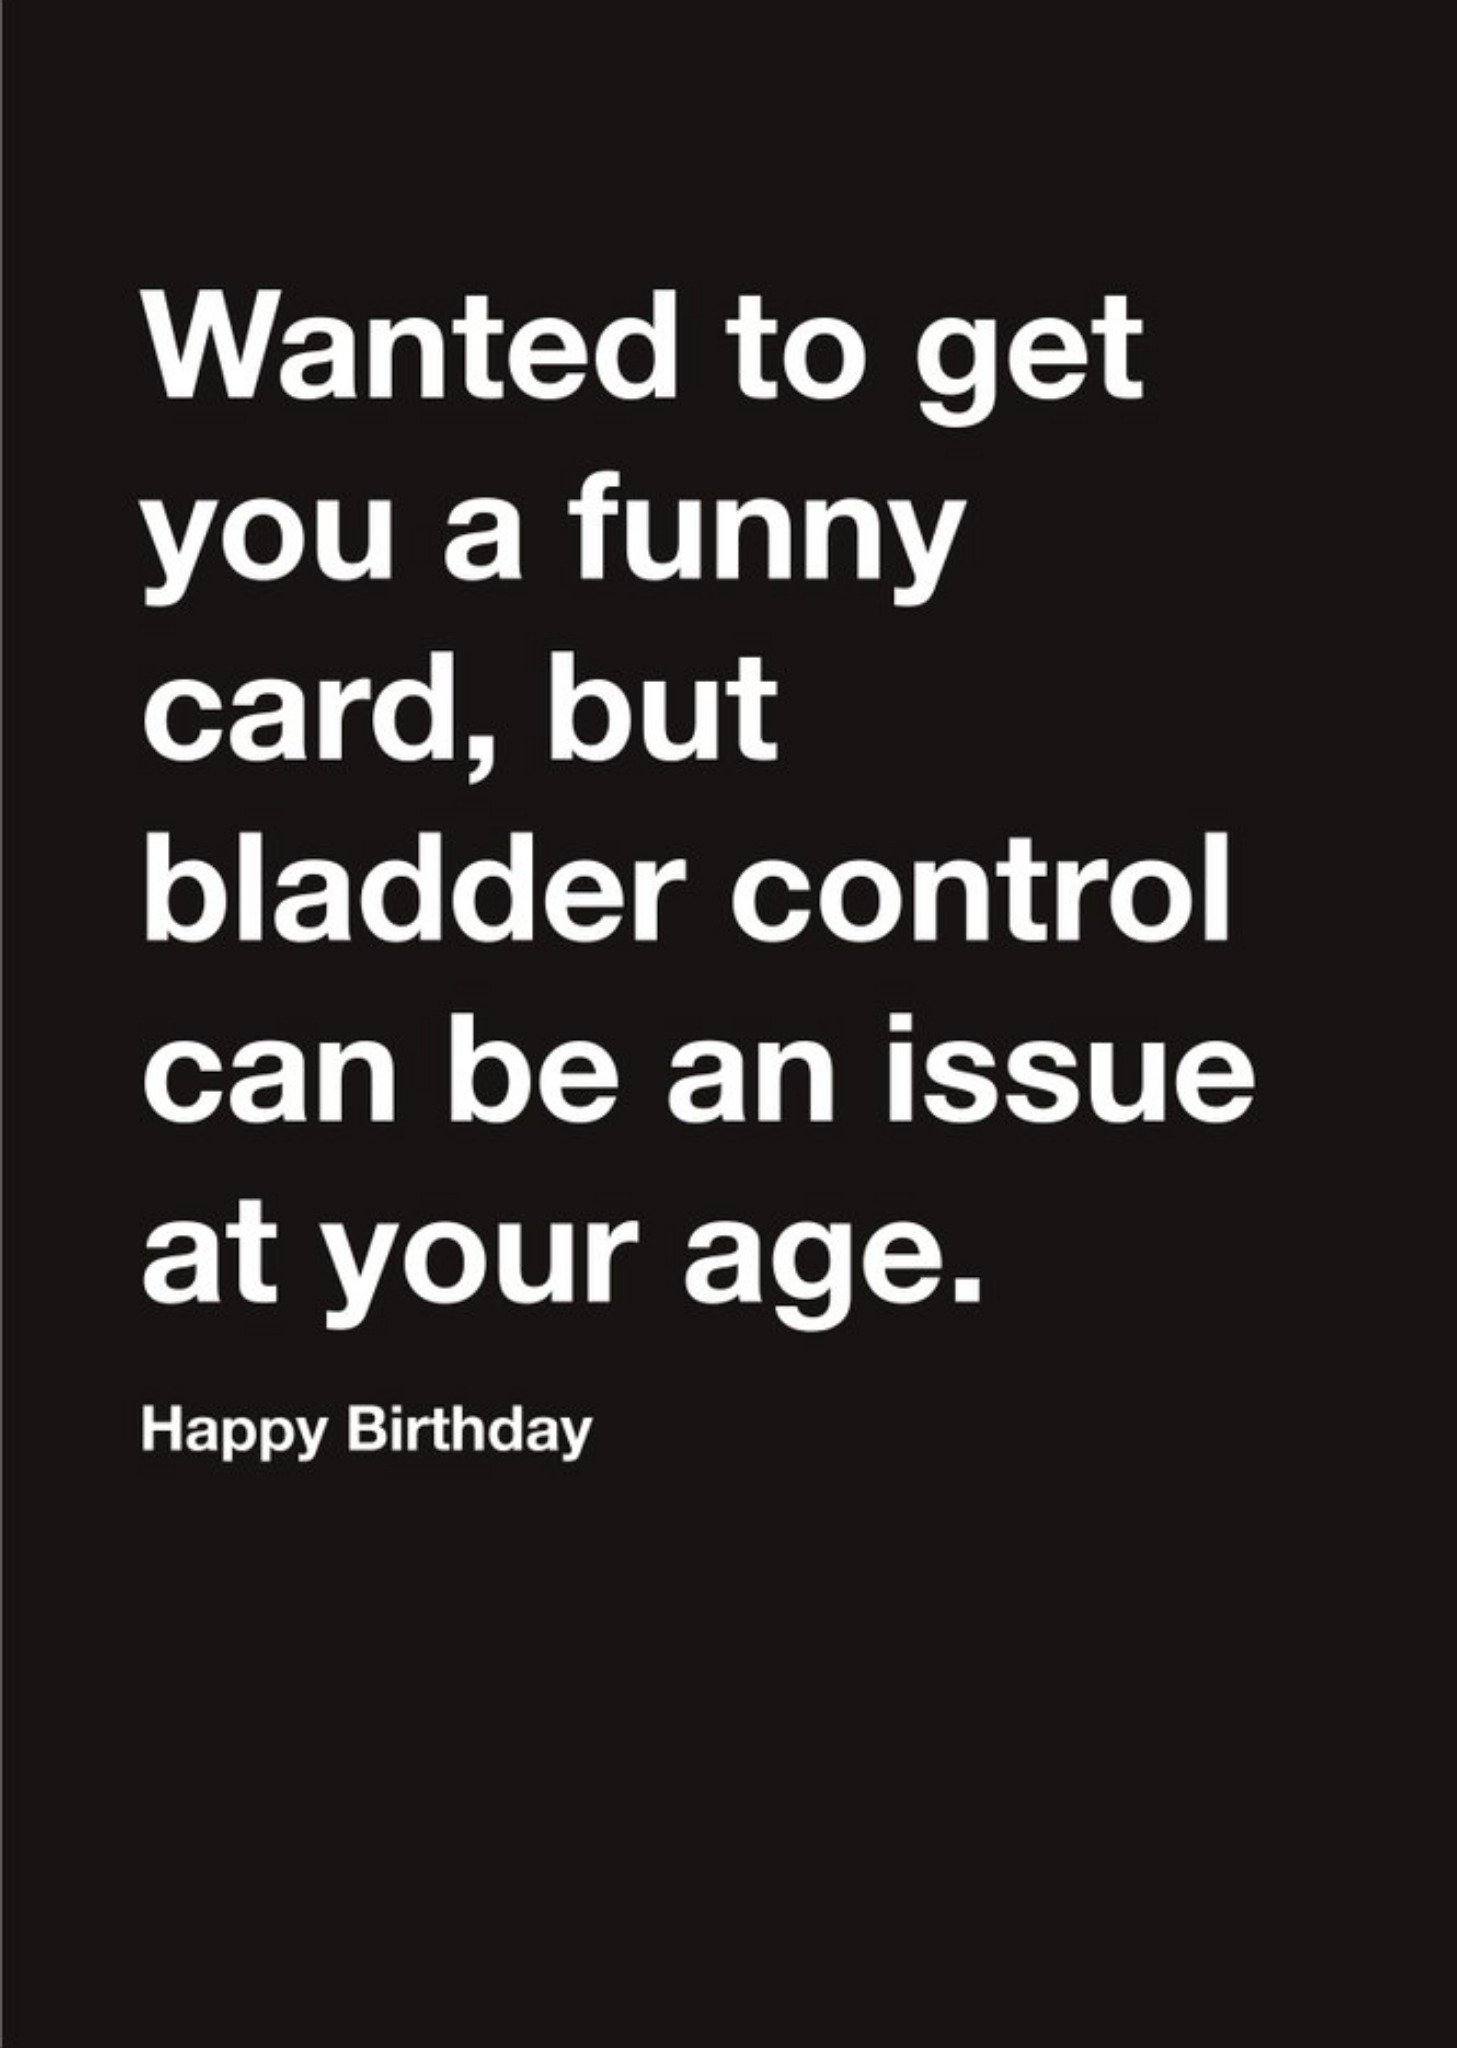 Moonpig Carte Blanche Funny Card Bladder Control Issues Happy Birthday Card Ecard